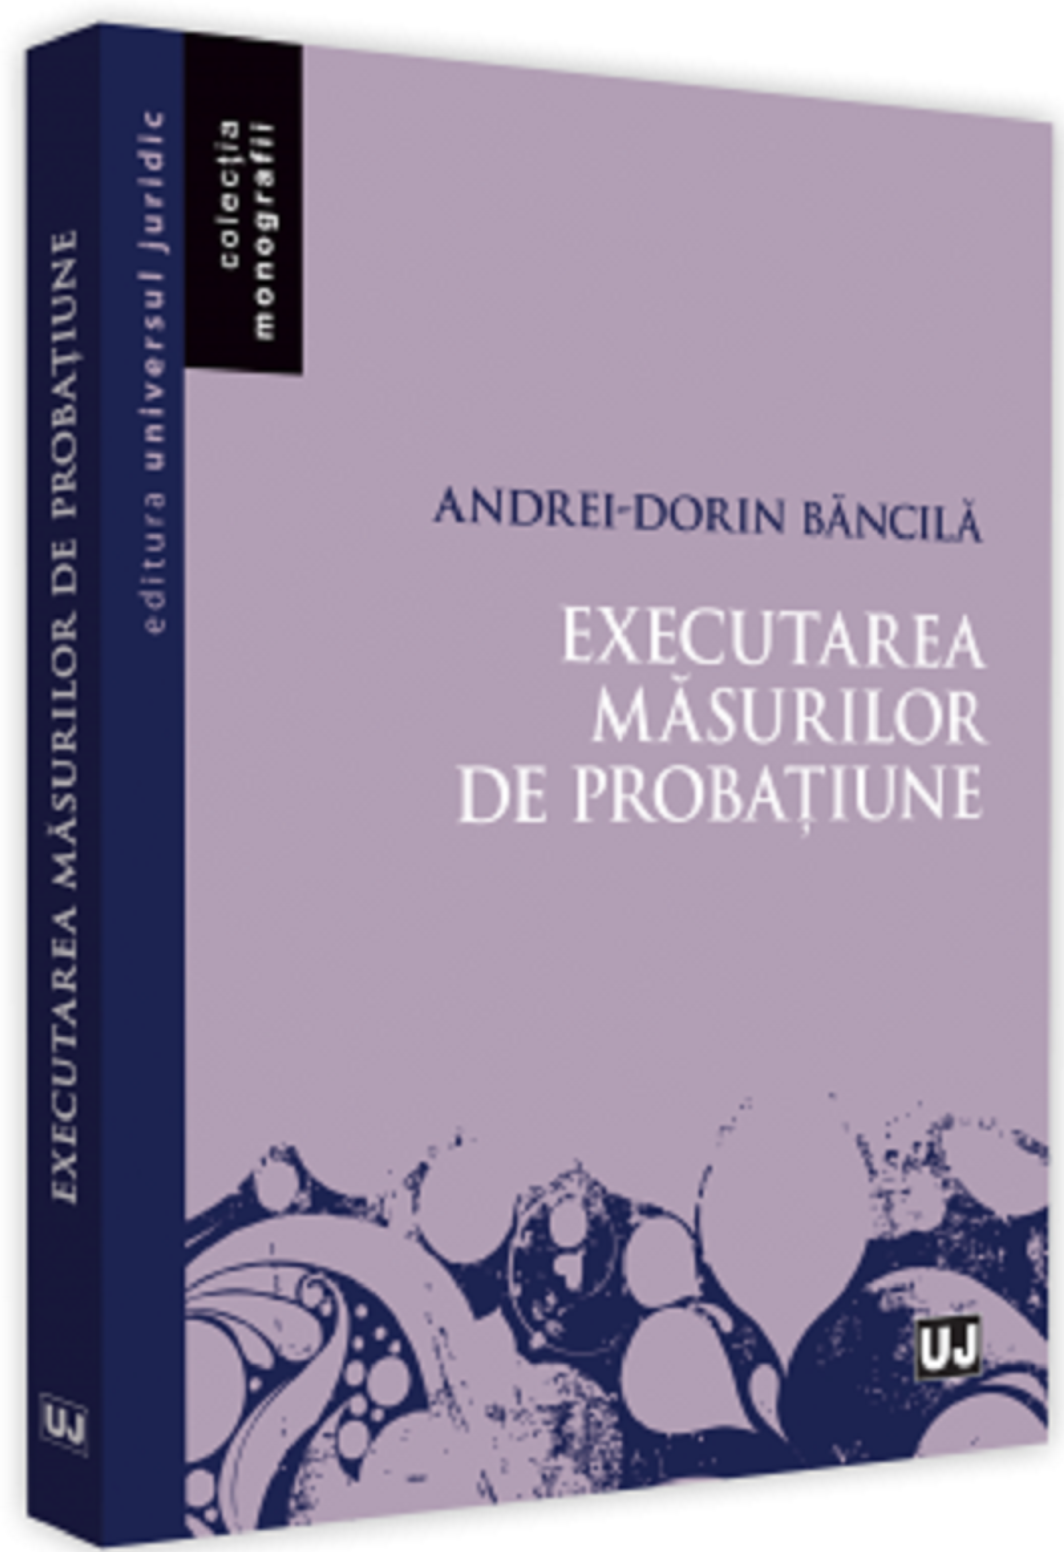 Executarea masurilor de probatiune | Andrei-Dorin Bancila carturesti.ro poza bestsellers.ro